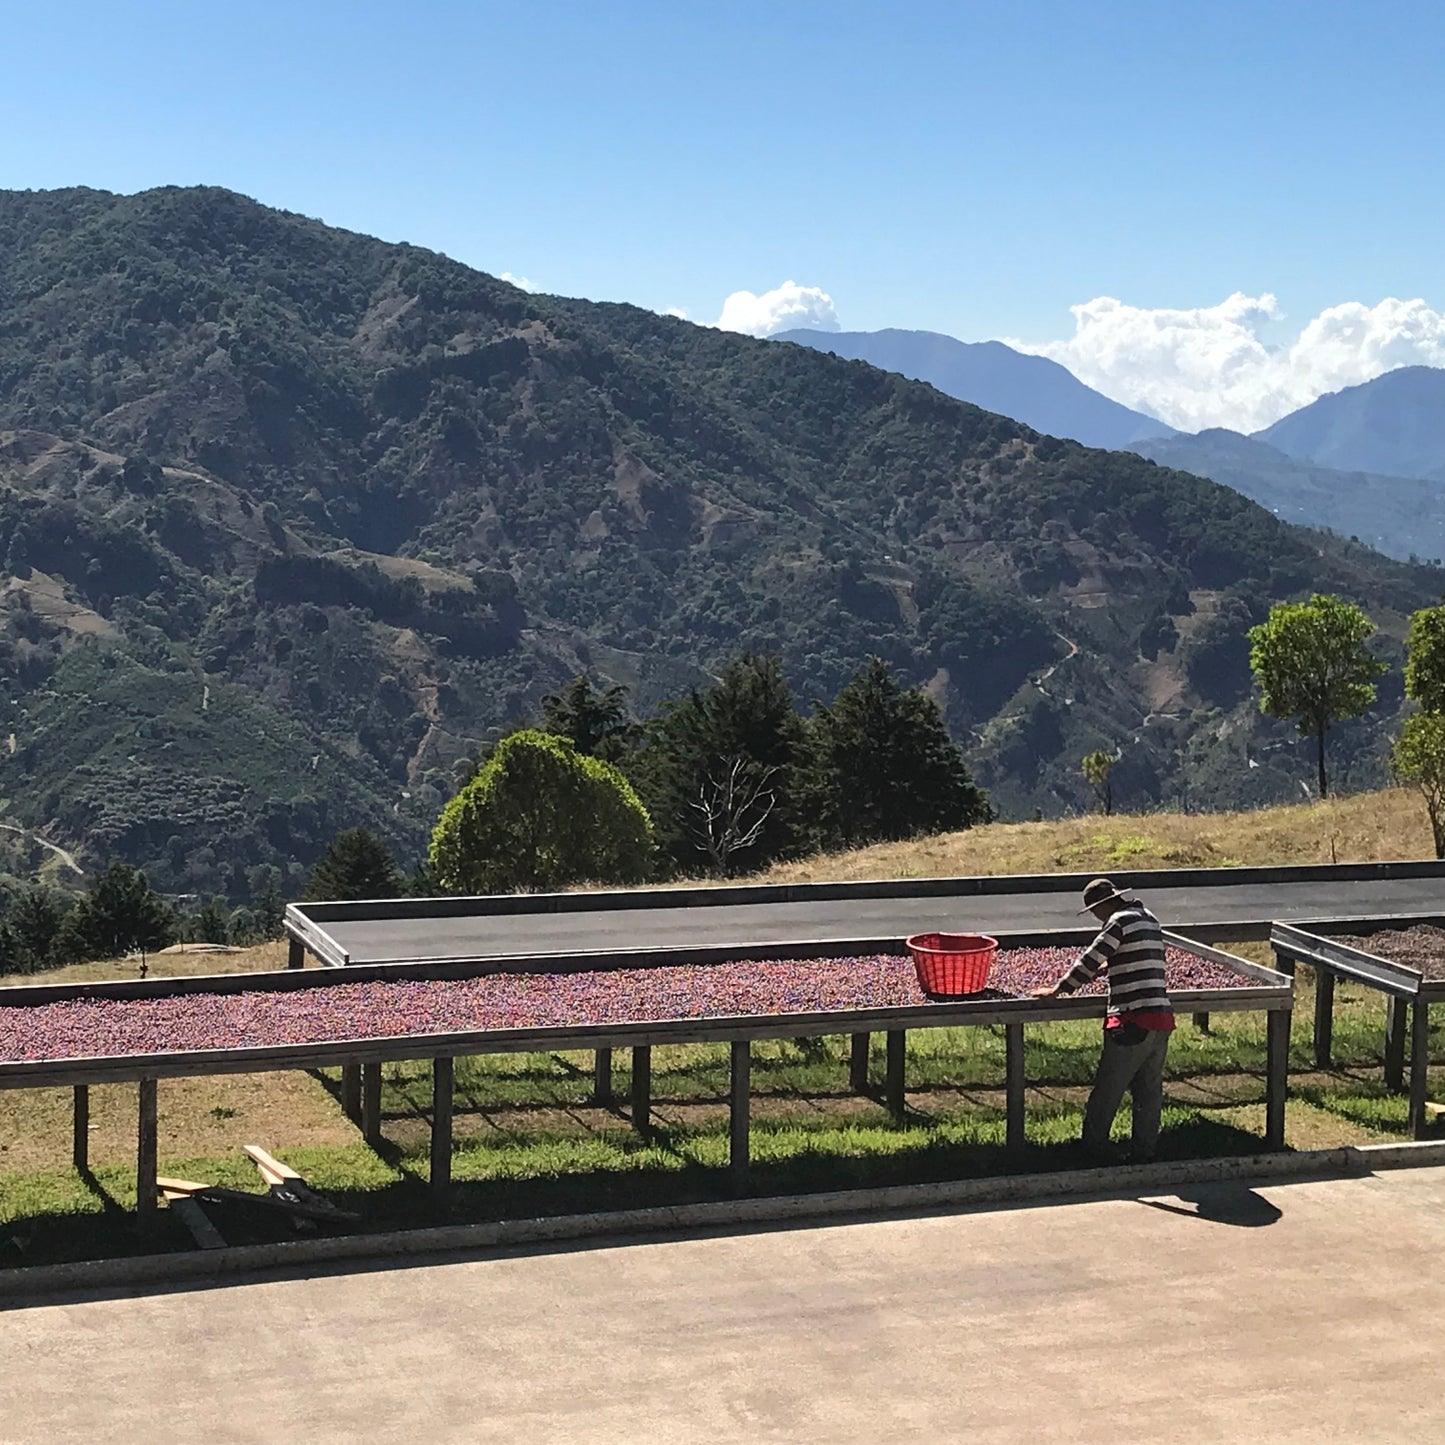 Coffee drying tables and mountainous landscape around Santa Teresa